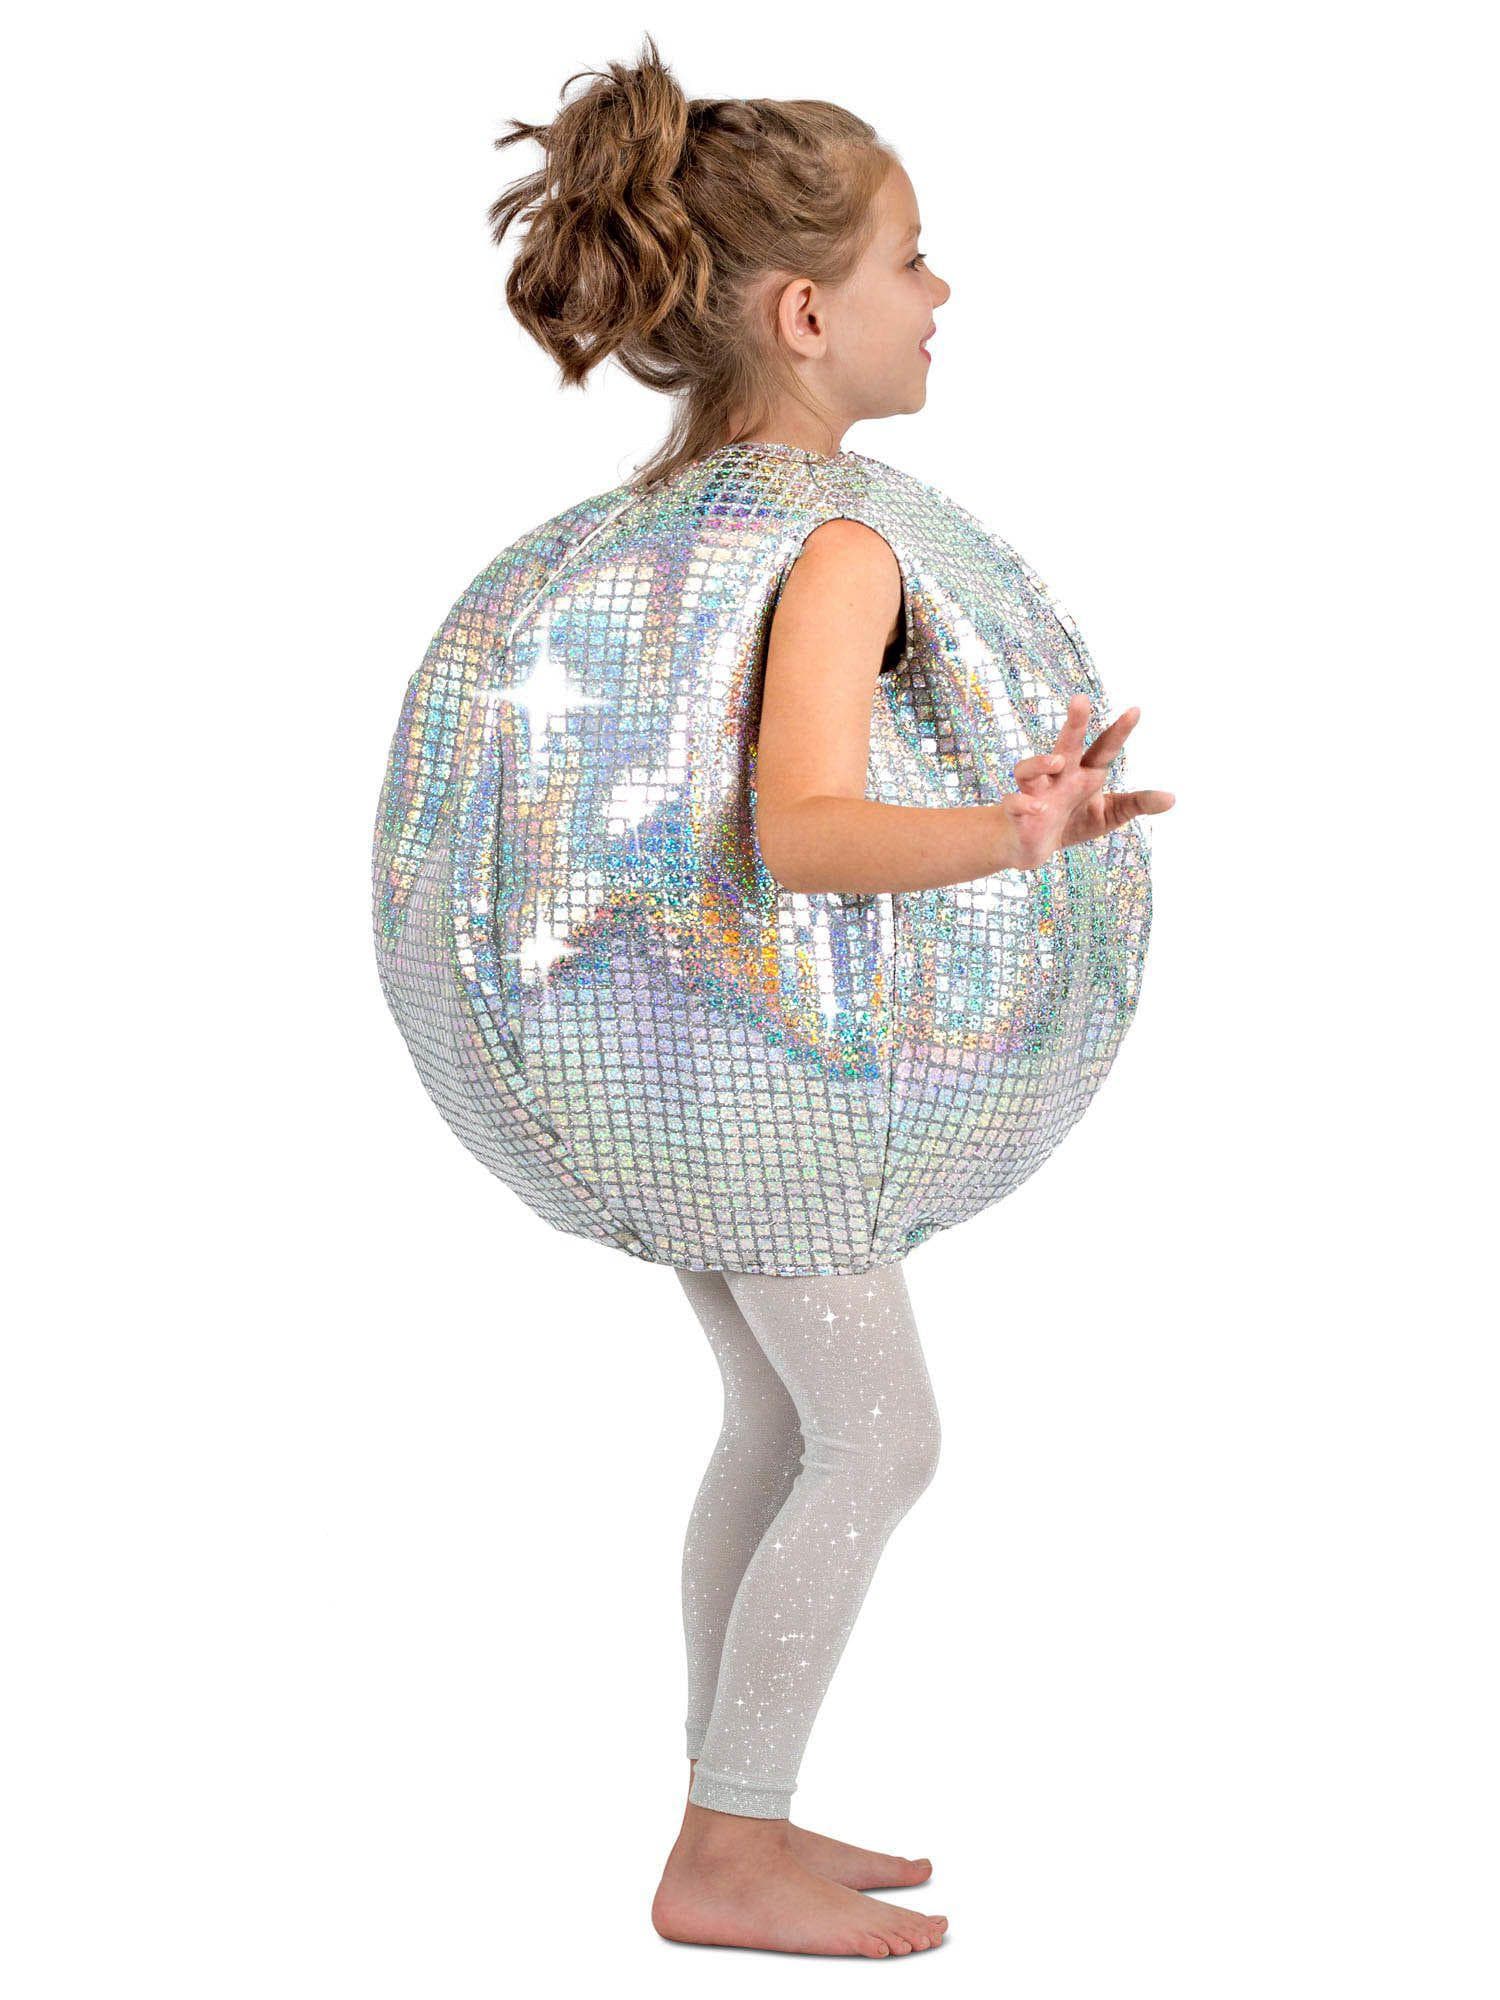 Kid's Disco Ball Costume - costumes.com